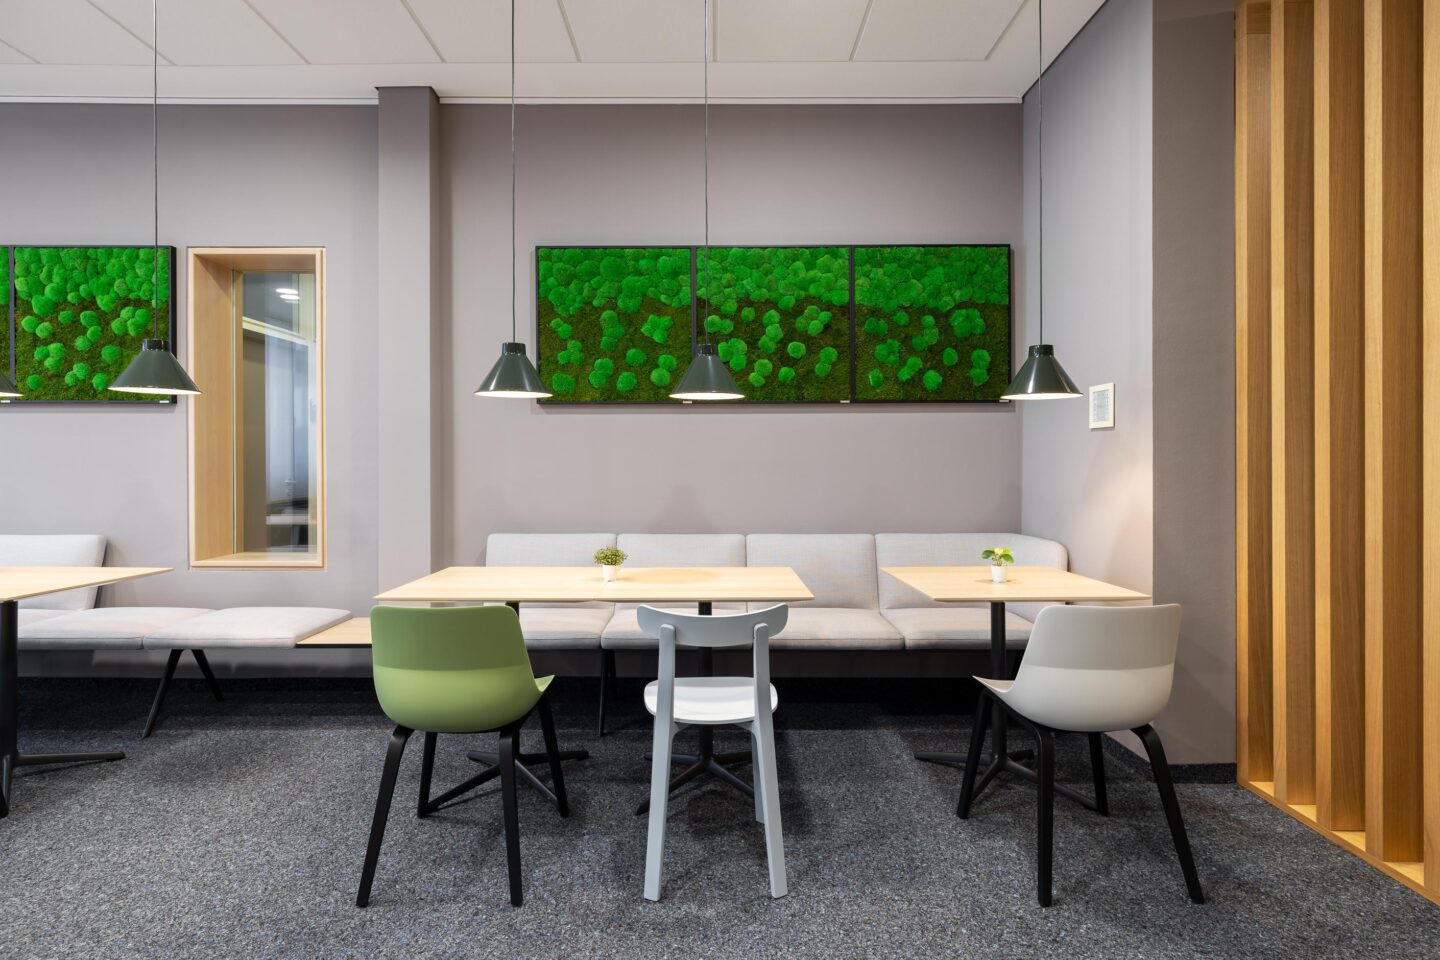 Workcafé FIZ Karlsruhe | green, grey and wooden color scheme of the cafeteria